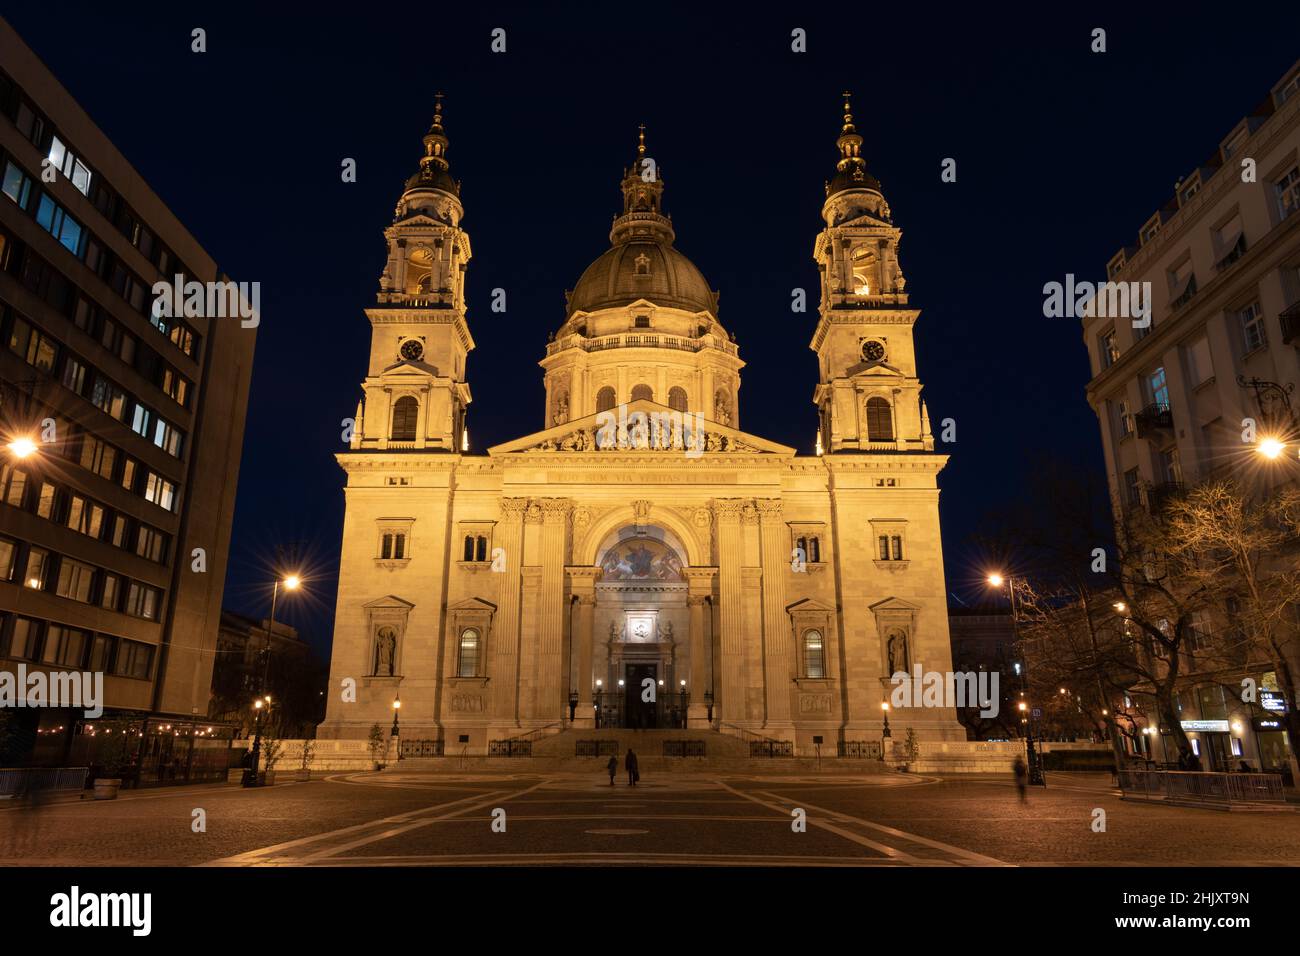 Saint Stephen (Szent Istvan) basilica church illuminated during night in Budapest Hungary Europe Stock Photo